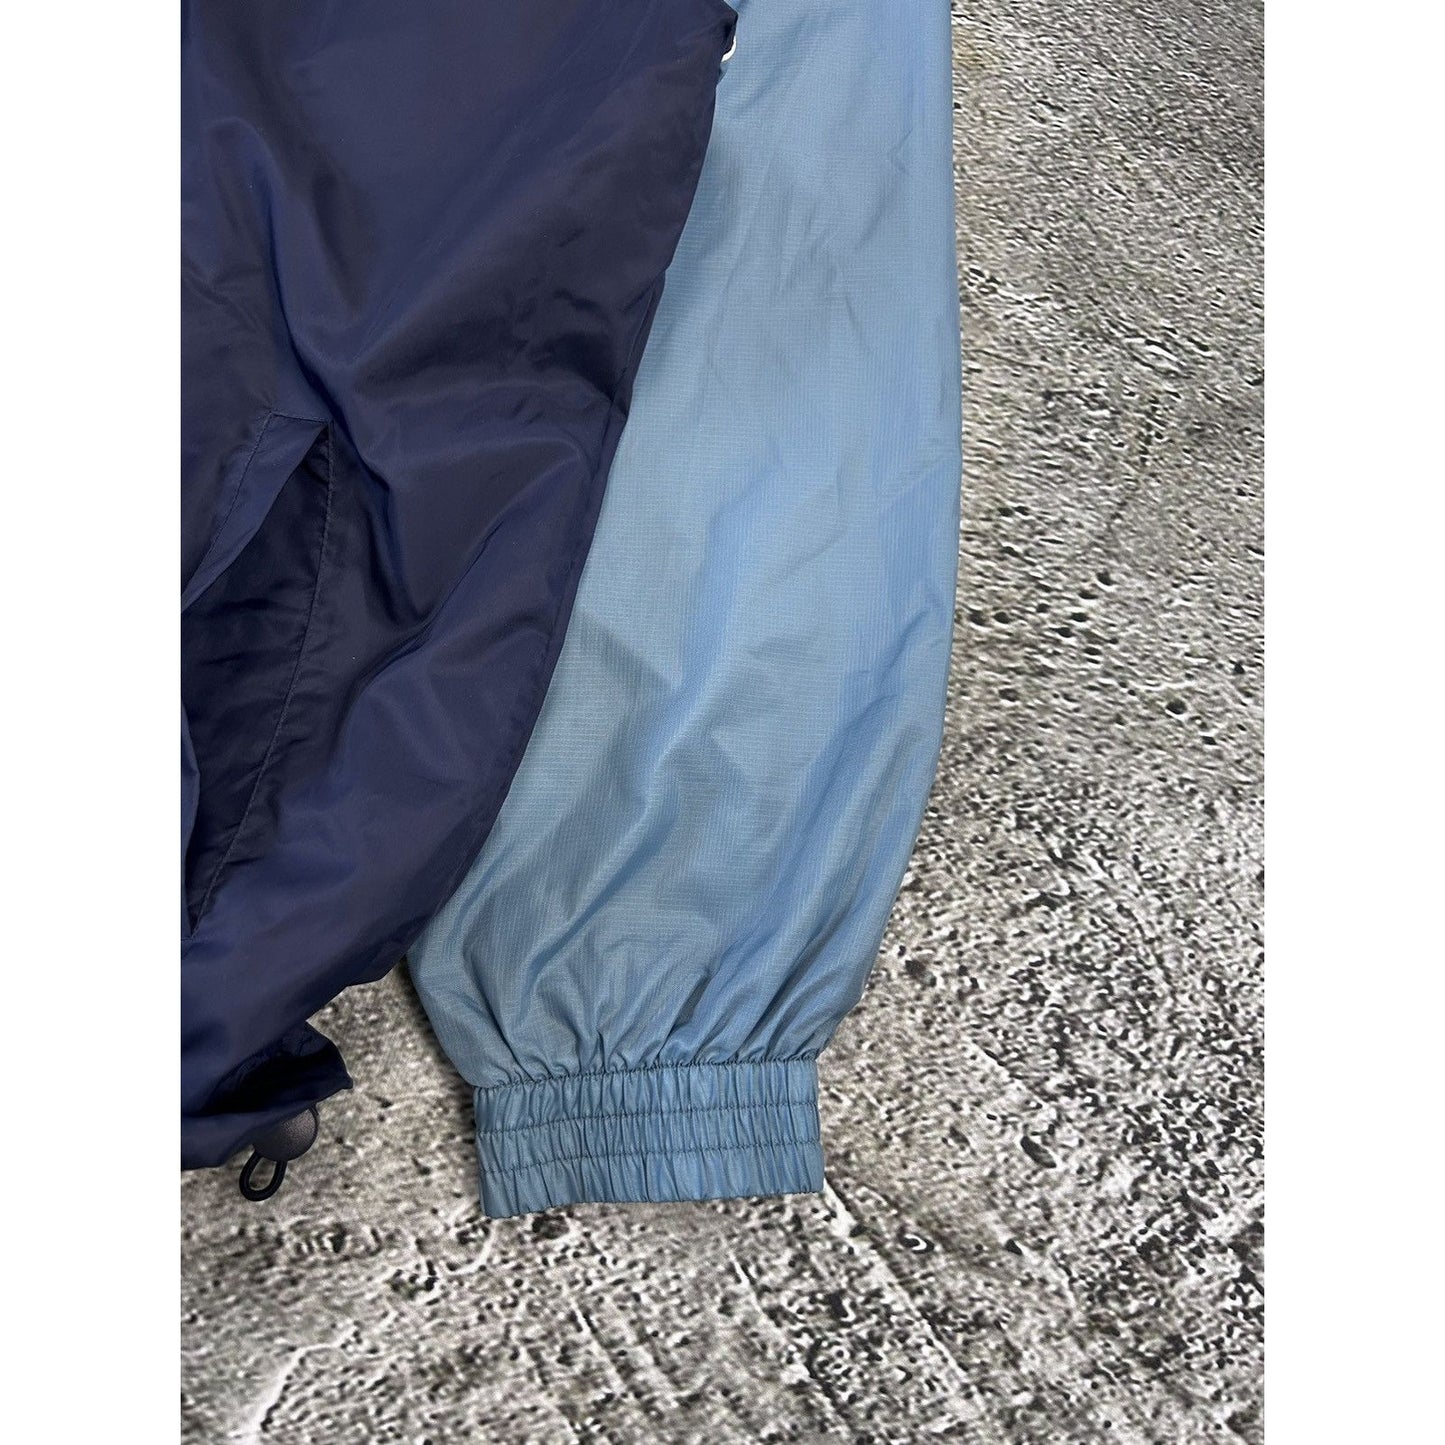 Fila tracksuit vintage pants windbreaker Y2K nylon set